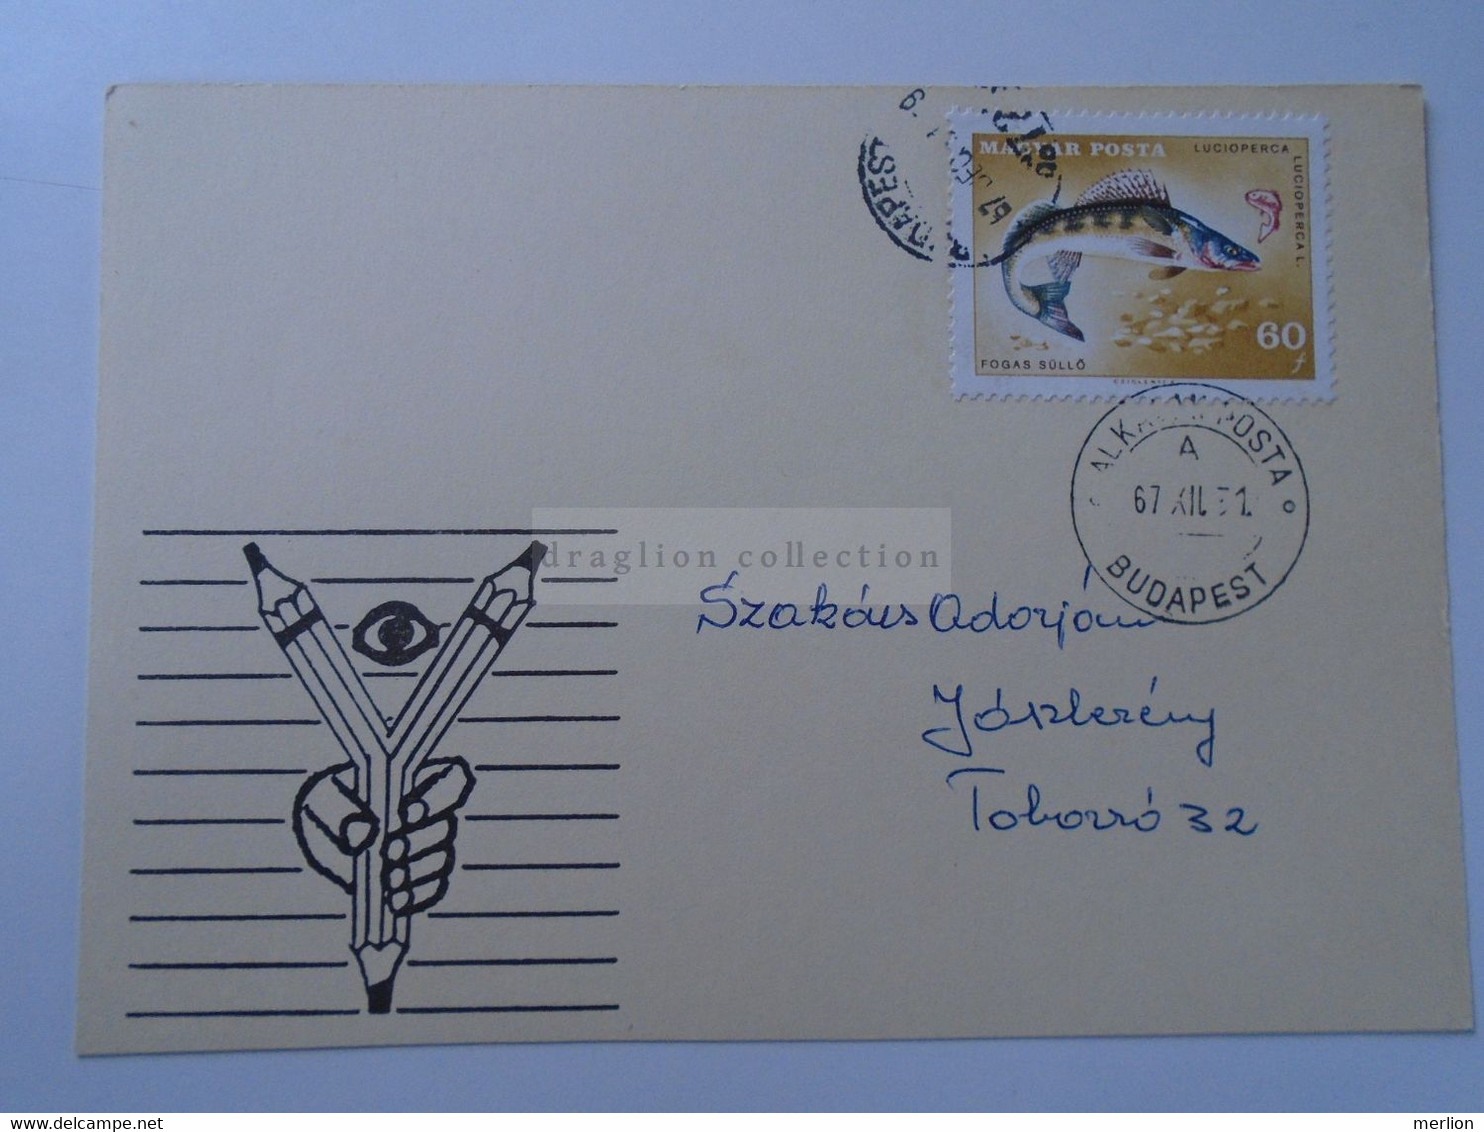 D187070    HUNGARY  Postmark     MAGYAR POSTA   - Hungarian Post -Alkalmi Posta Budapest  1967 - Poststempel (Marcophilie)